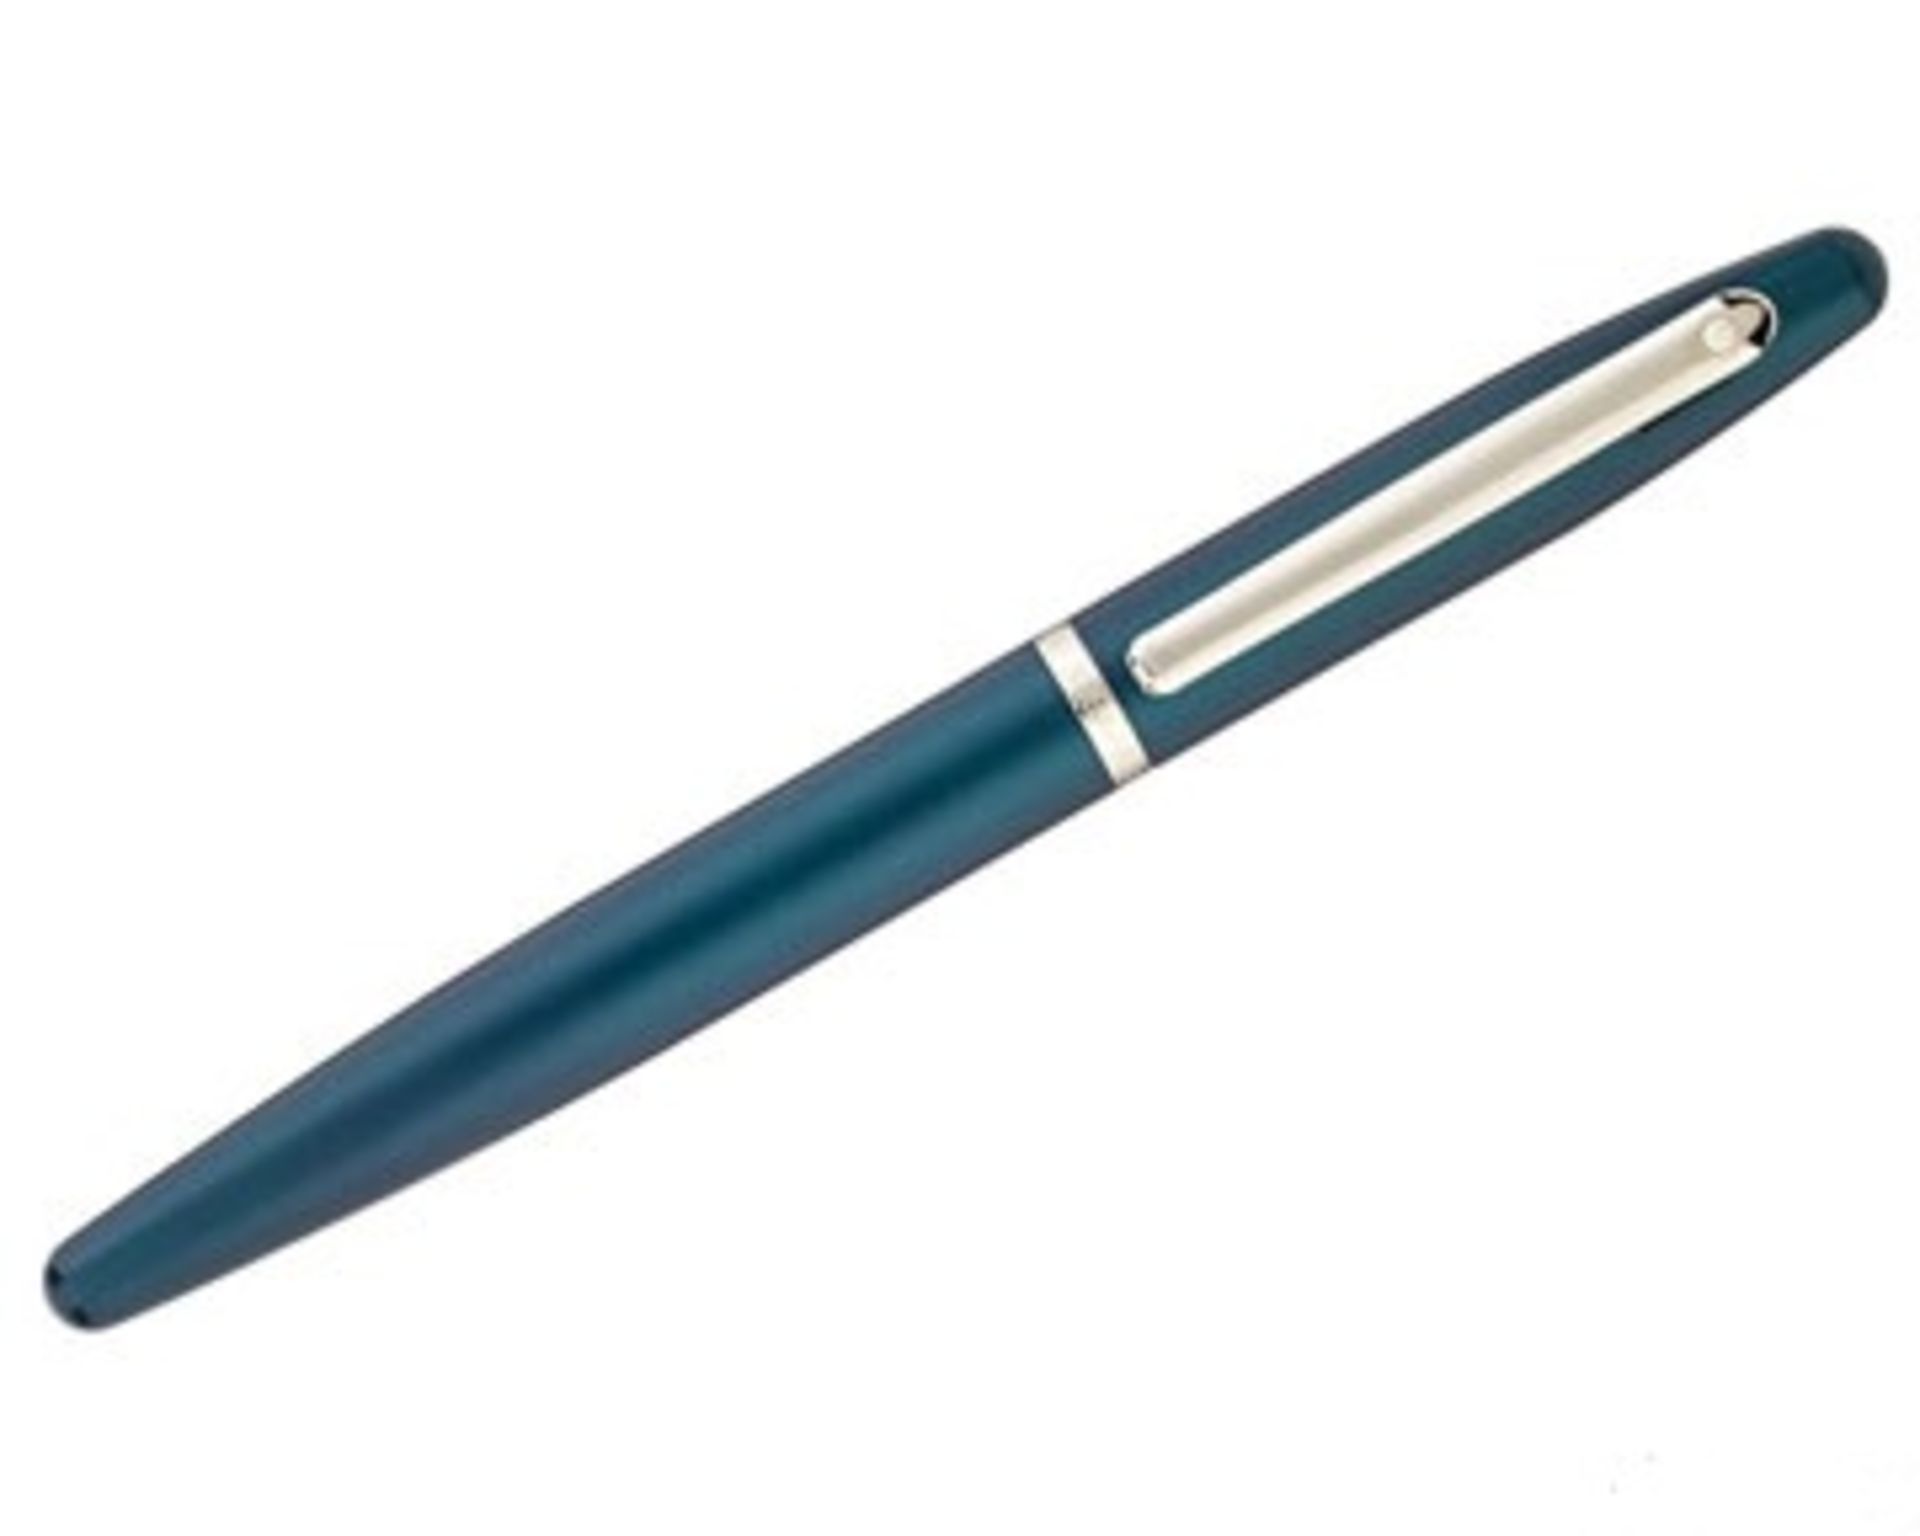 V Brand New Sheaffer VFM Fountain Pen In Satin Peacock Green And Chrome Trim In Presentation Case